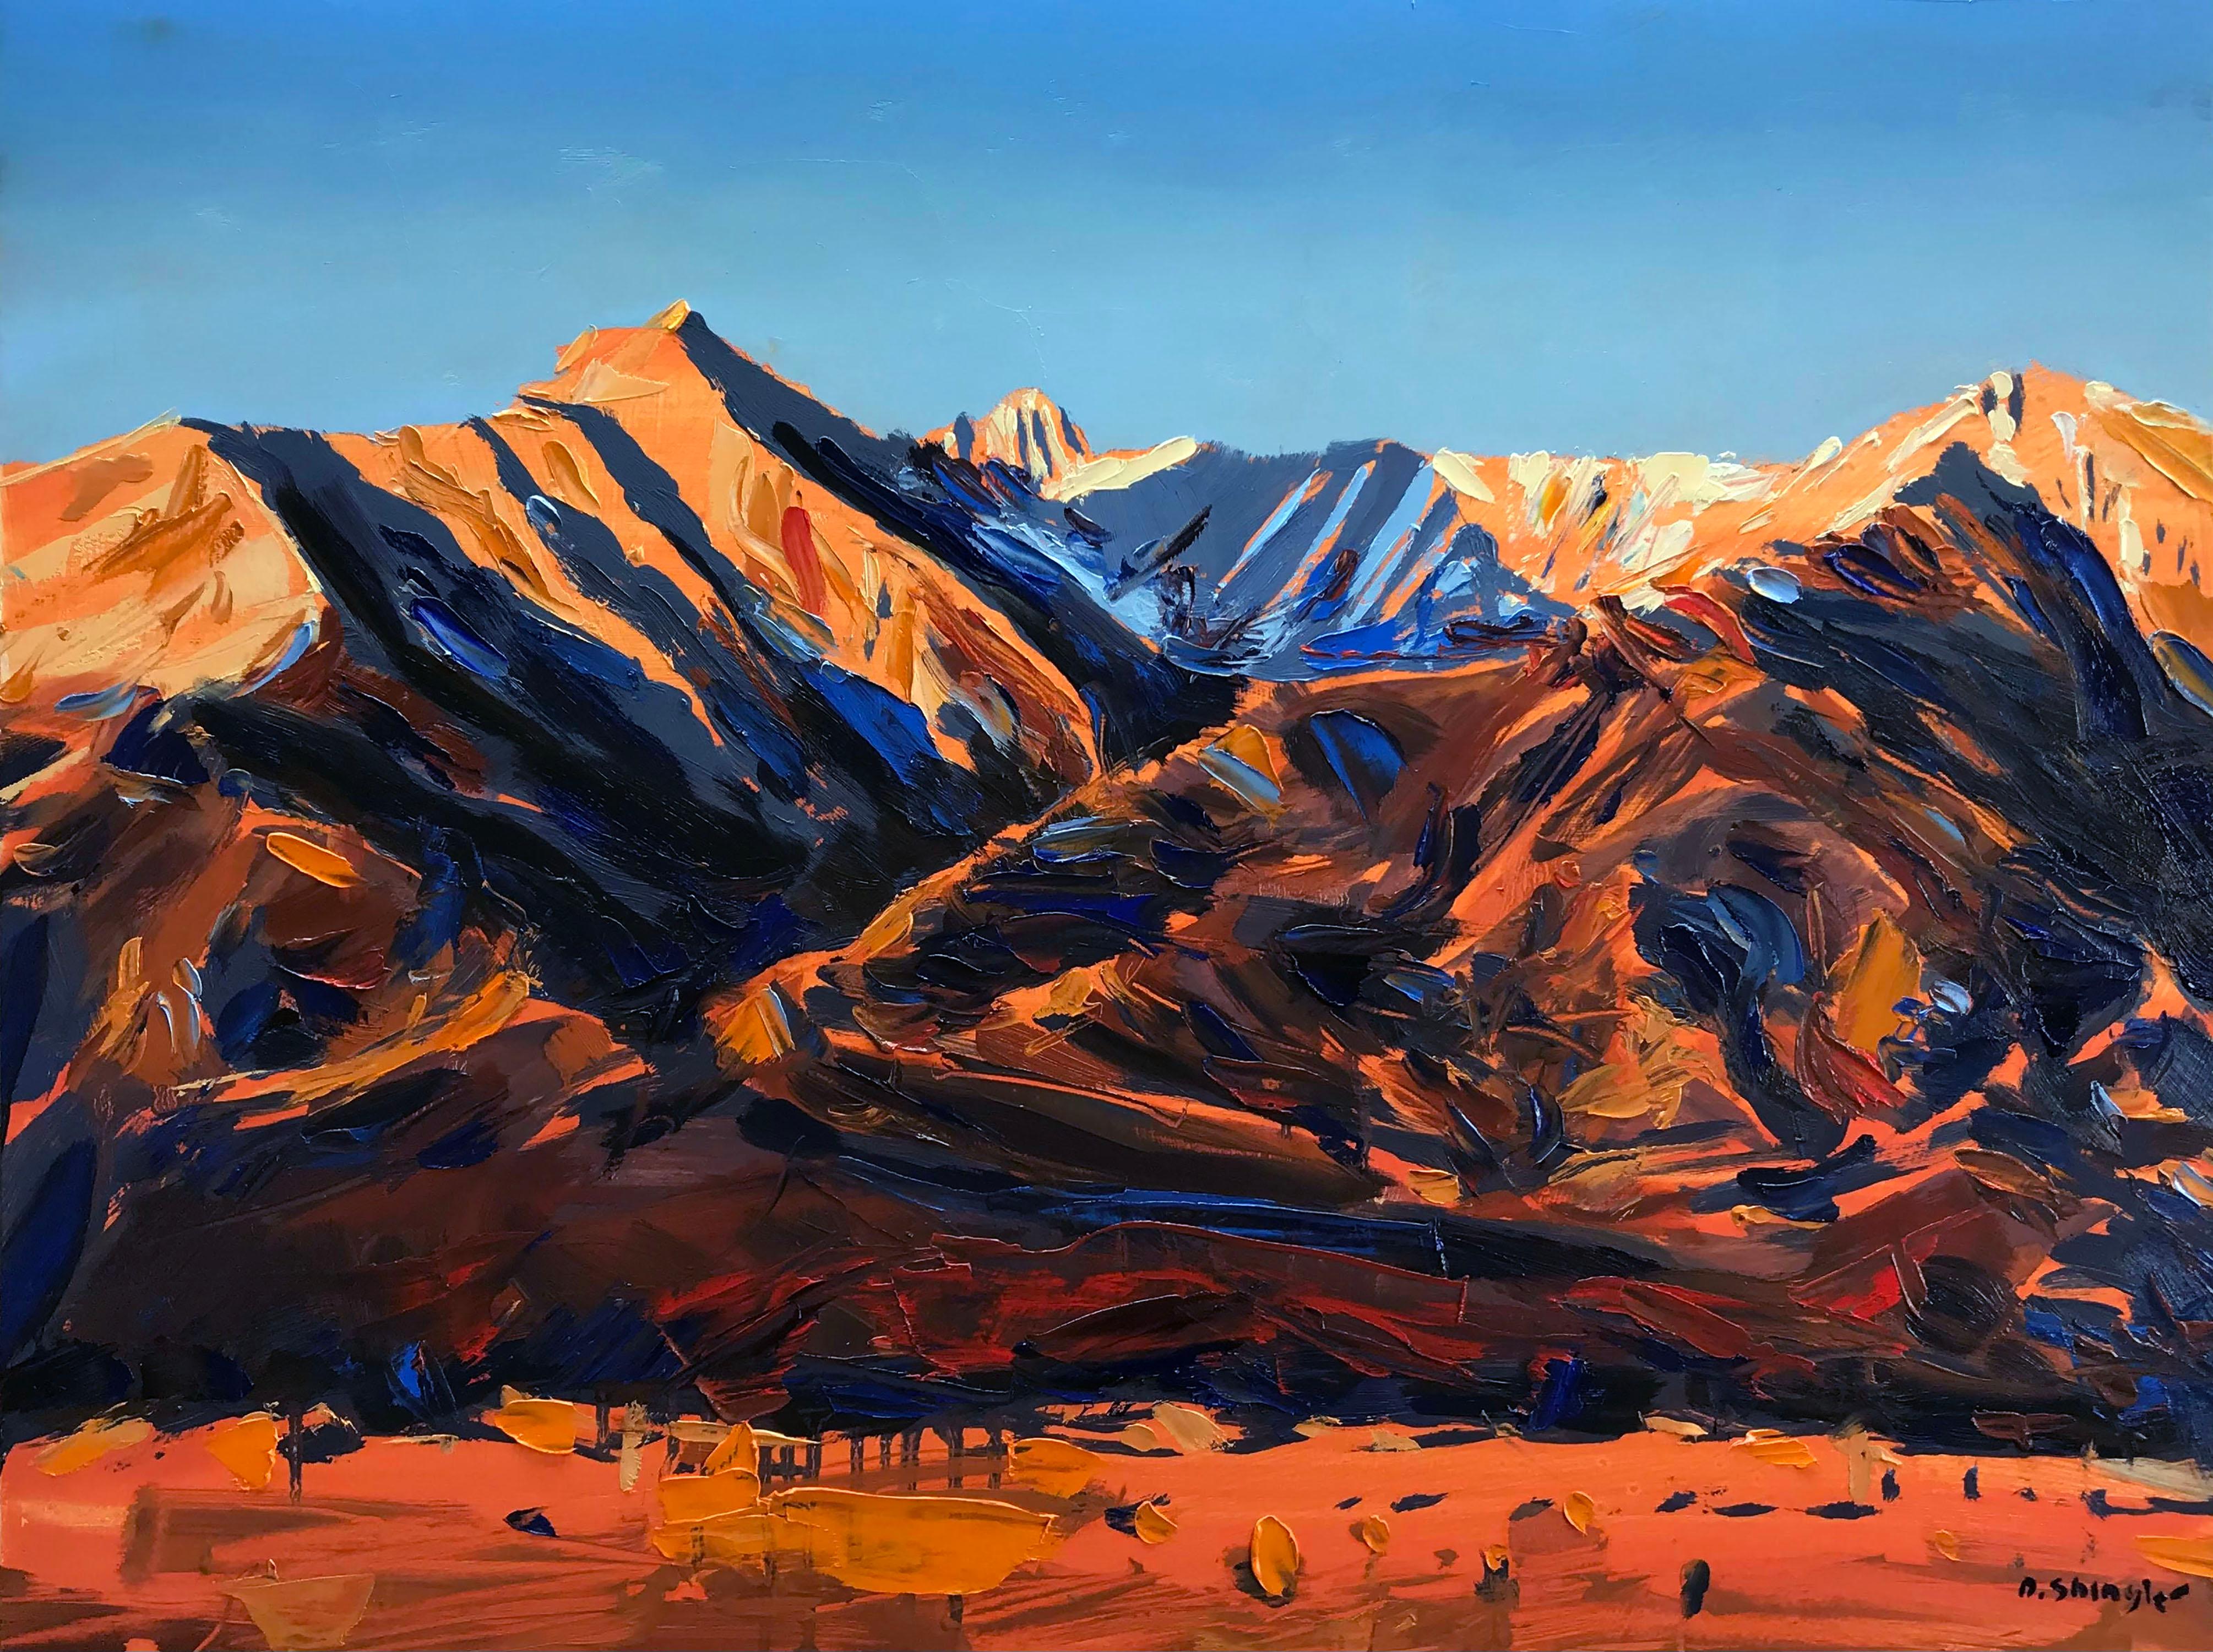 David Shingler Figurative Painting - "Sangre De Cristo Sunrise, Colorado" Oil Painting